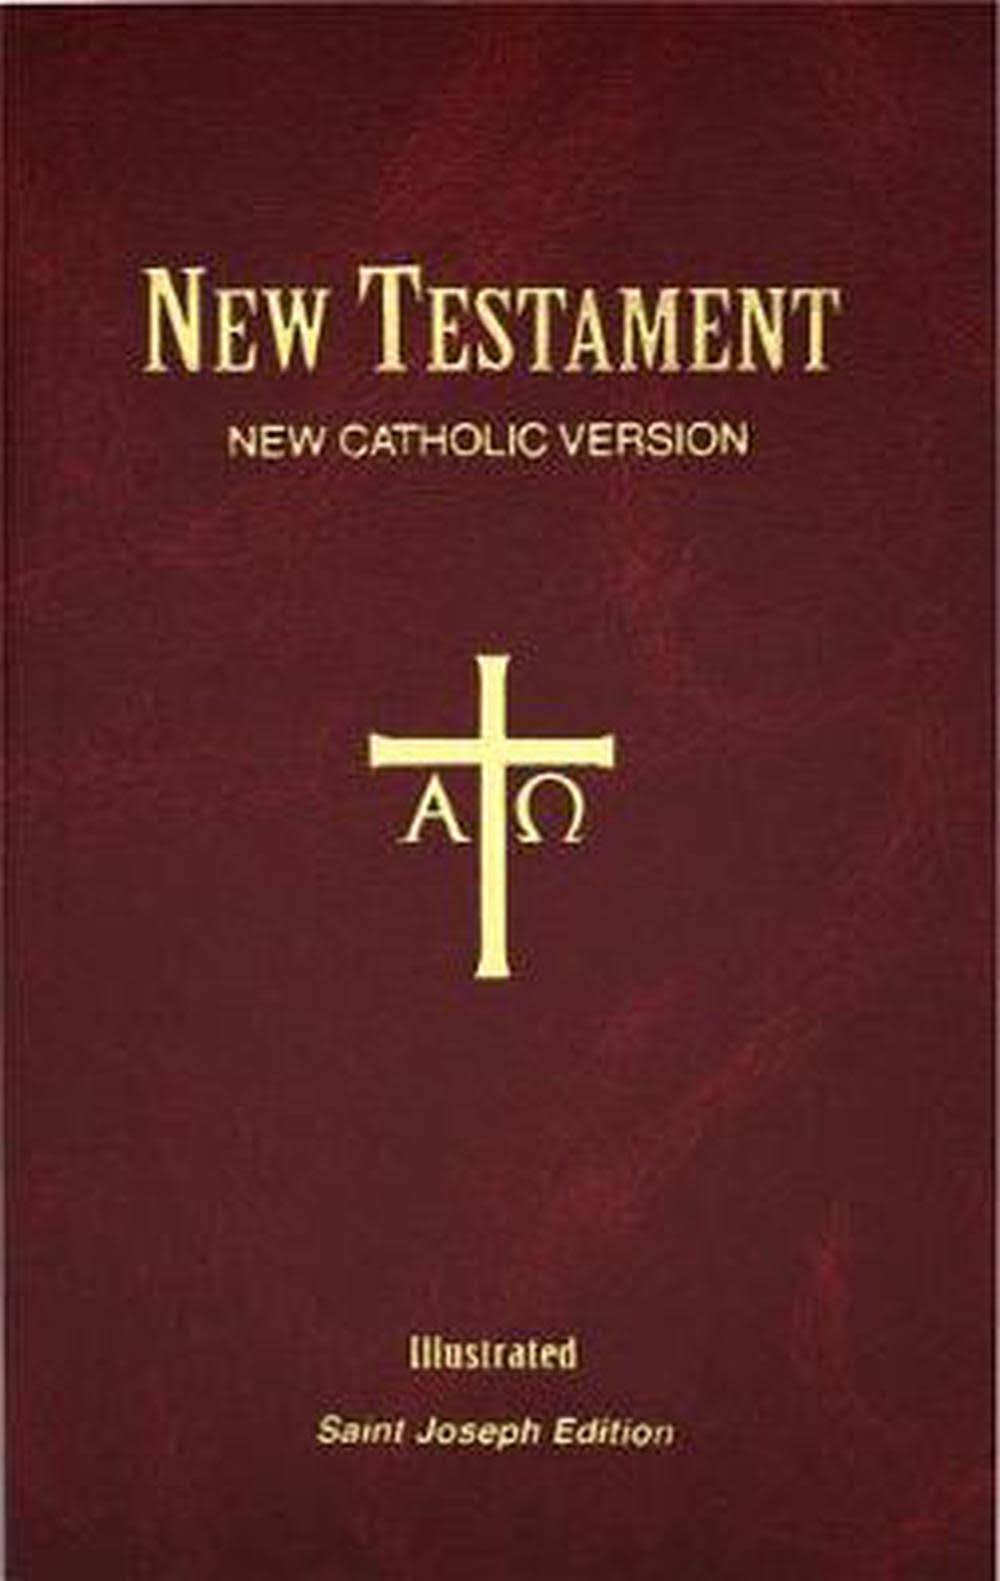 St. Joseph New Catholic Version New Testament: Pocket Edition [Book]